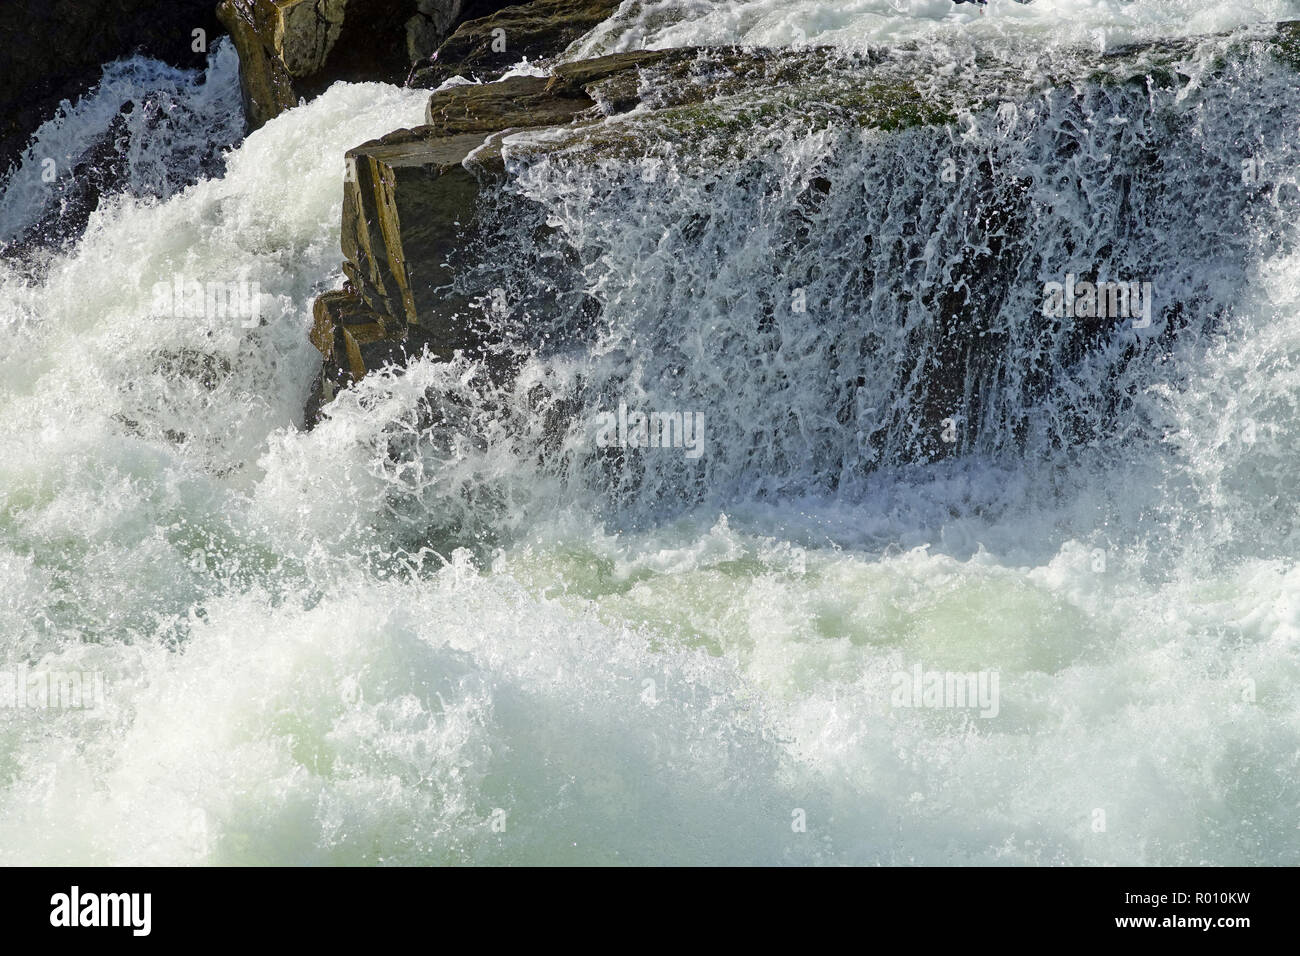 rumbling waters surrounding rock at Great Falls Stock Photo